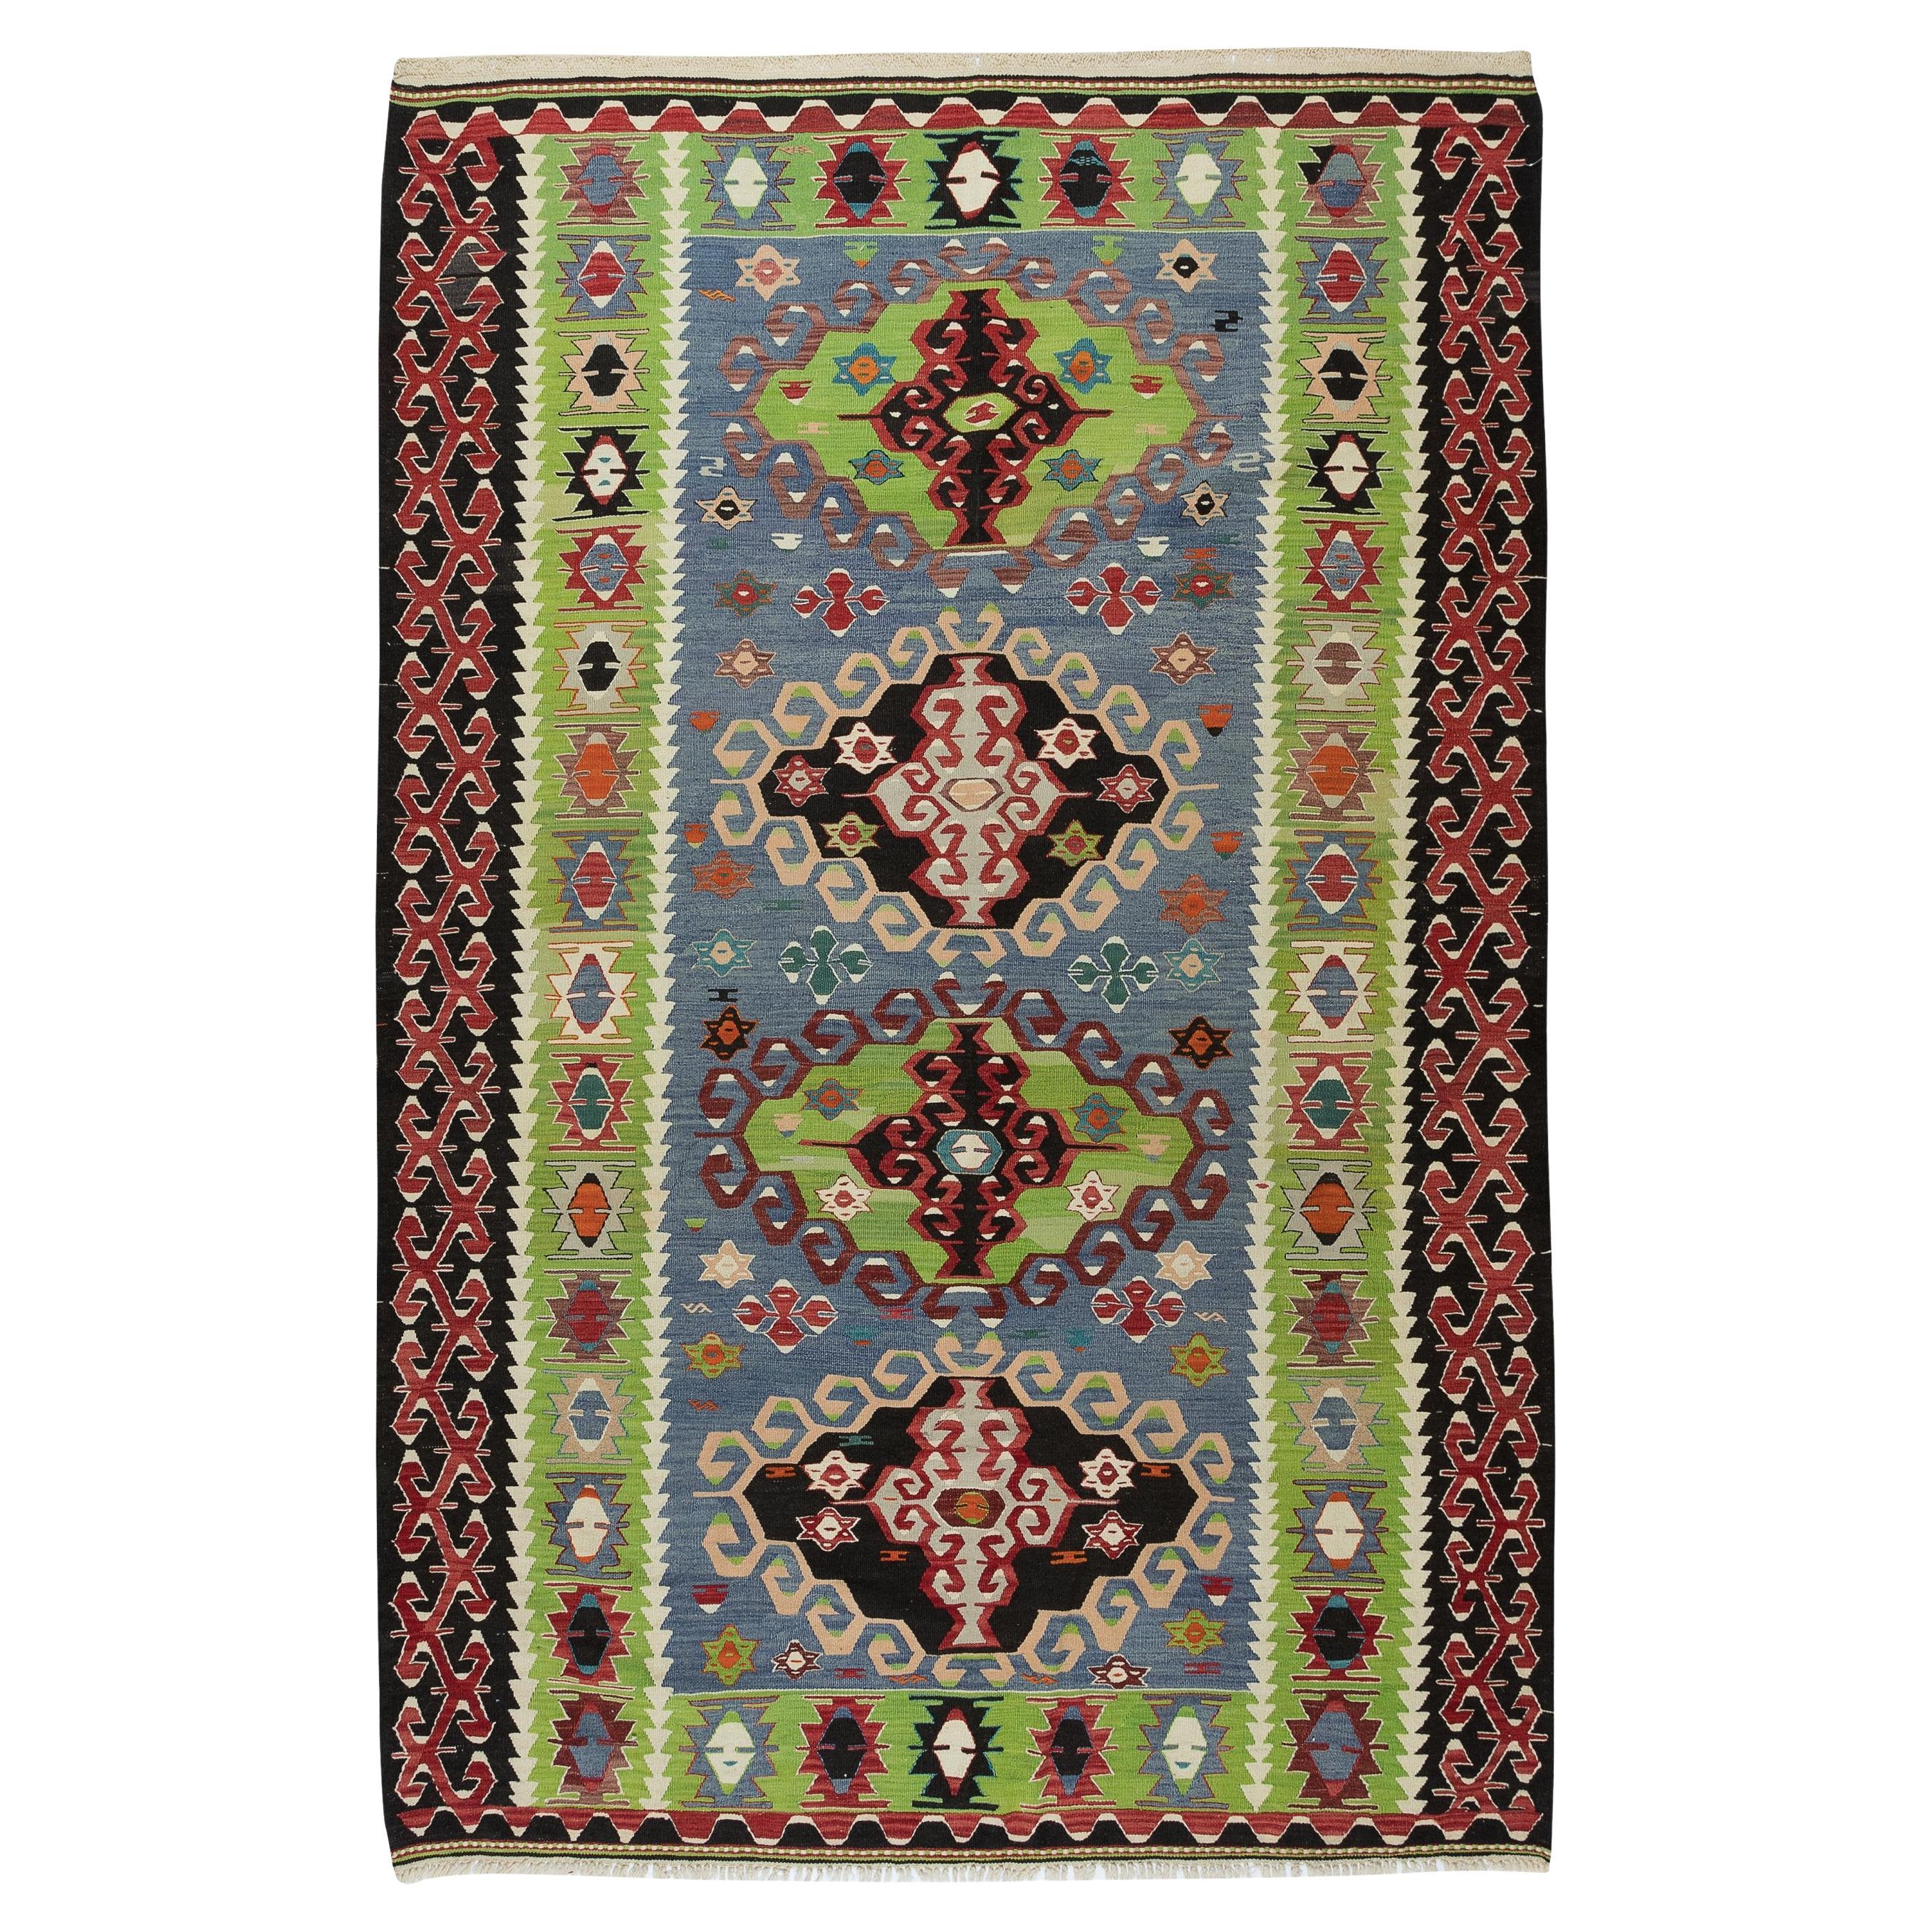 6x8.8 Ft Colorful Vintage Handmade Turkish Kilim Rug, Flat-Weave Floor Covering im Angebot